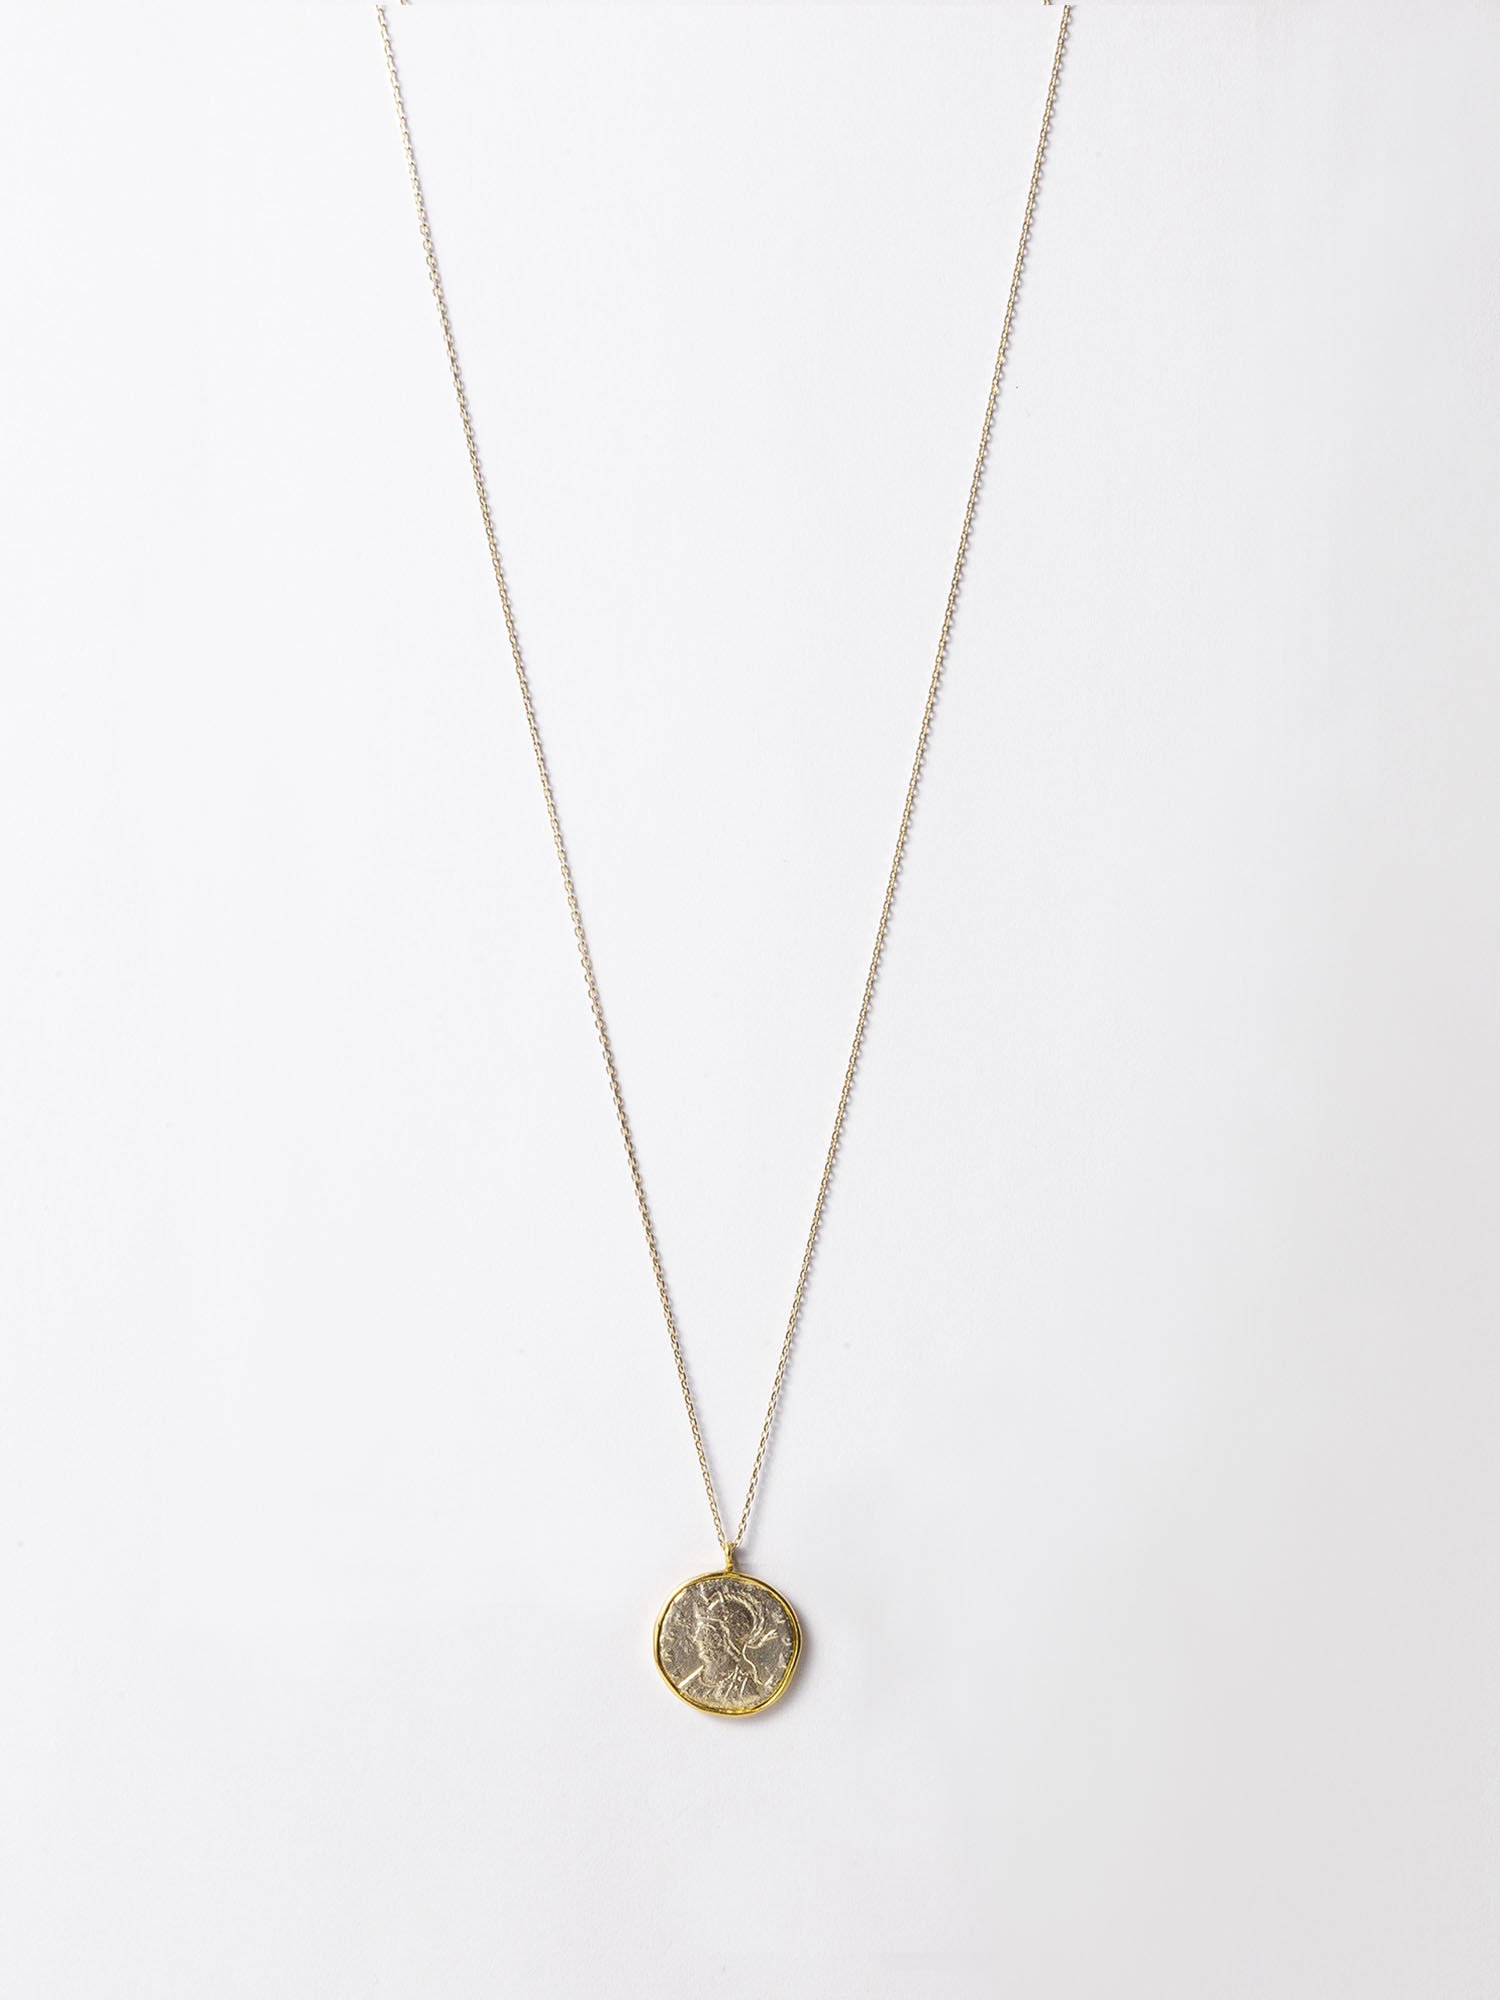 ARTEMIS / Roman coin necklace / Romulus and Remus / ߸˾